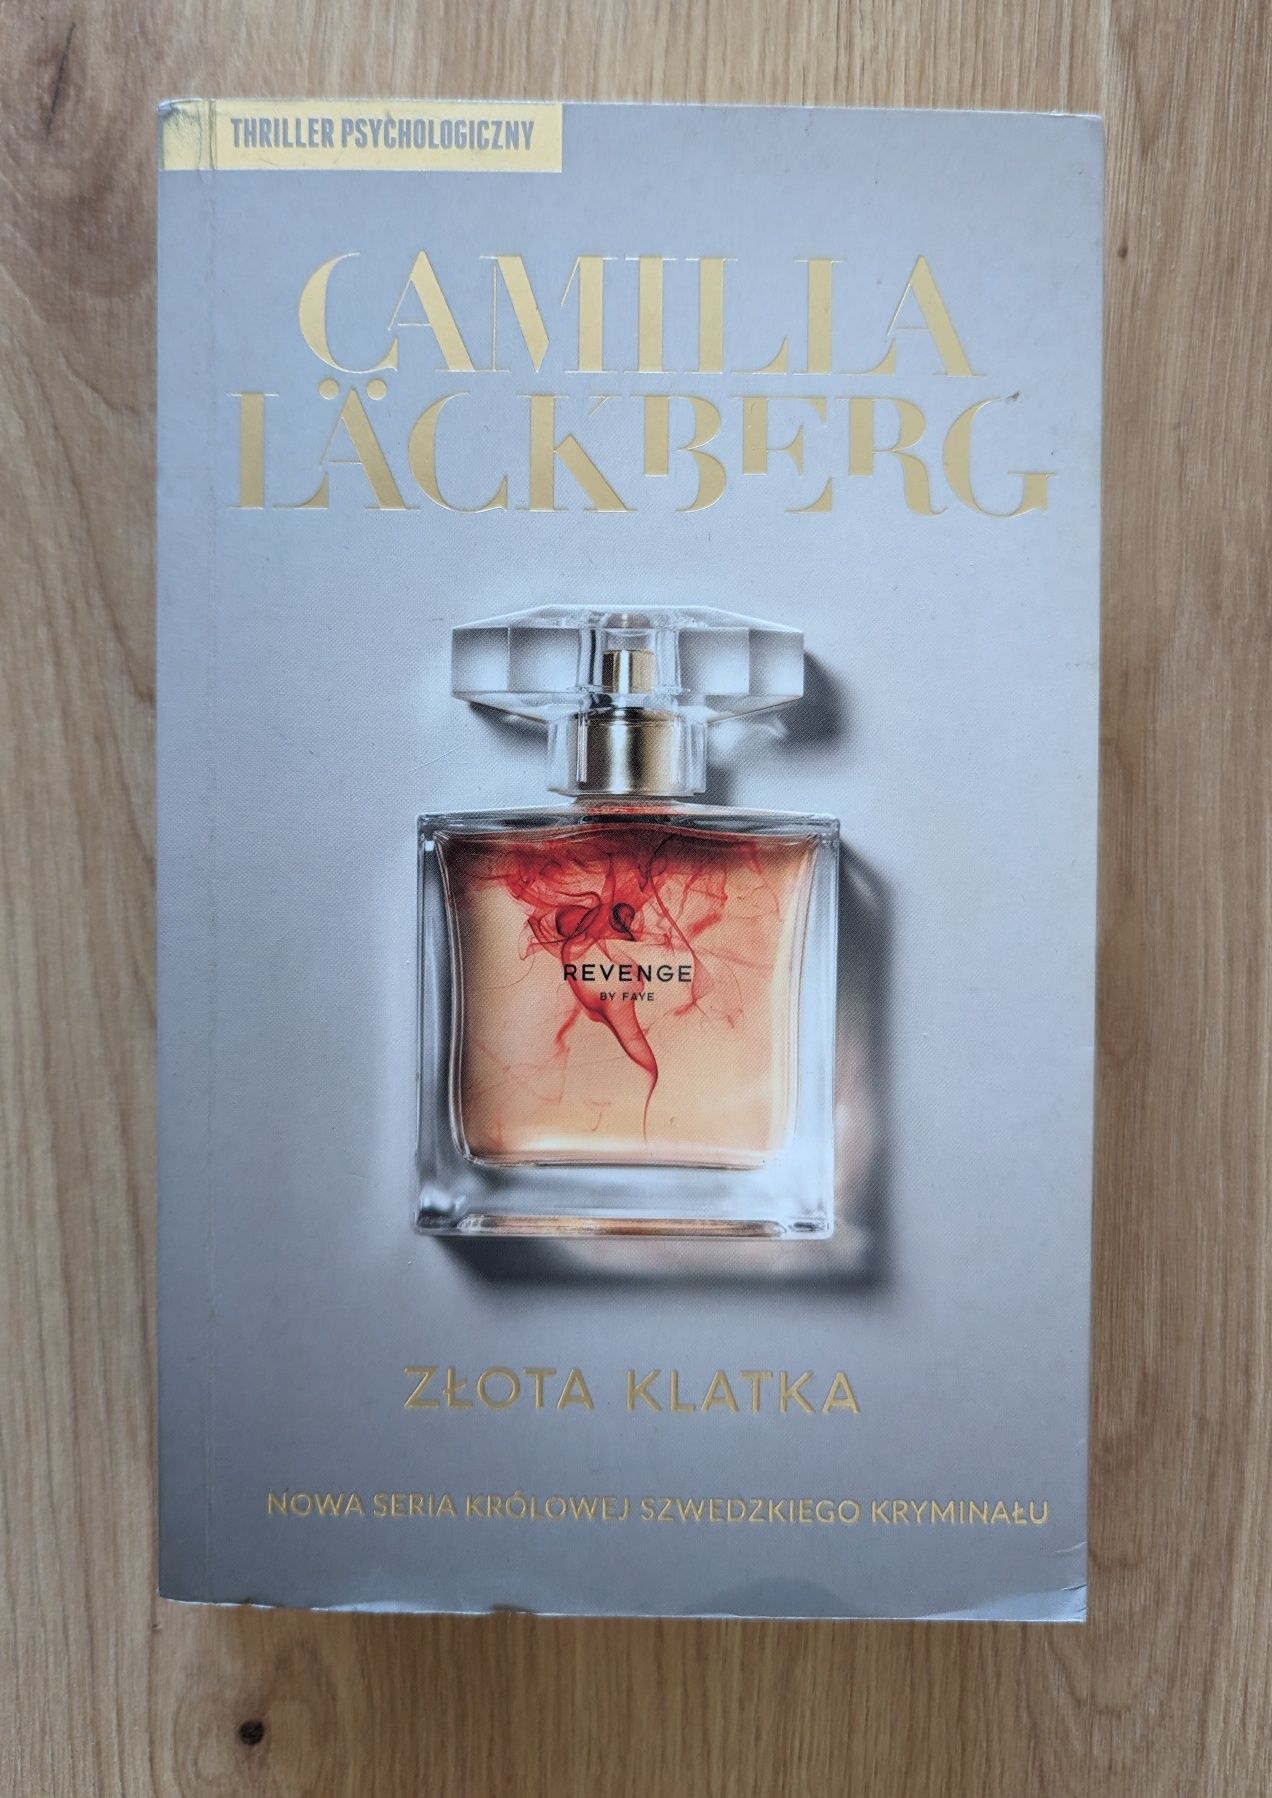 Camila Lackberg "Złota klatka"